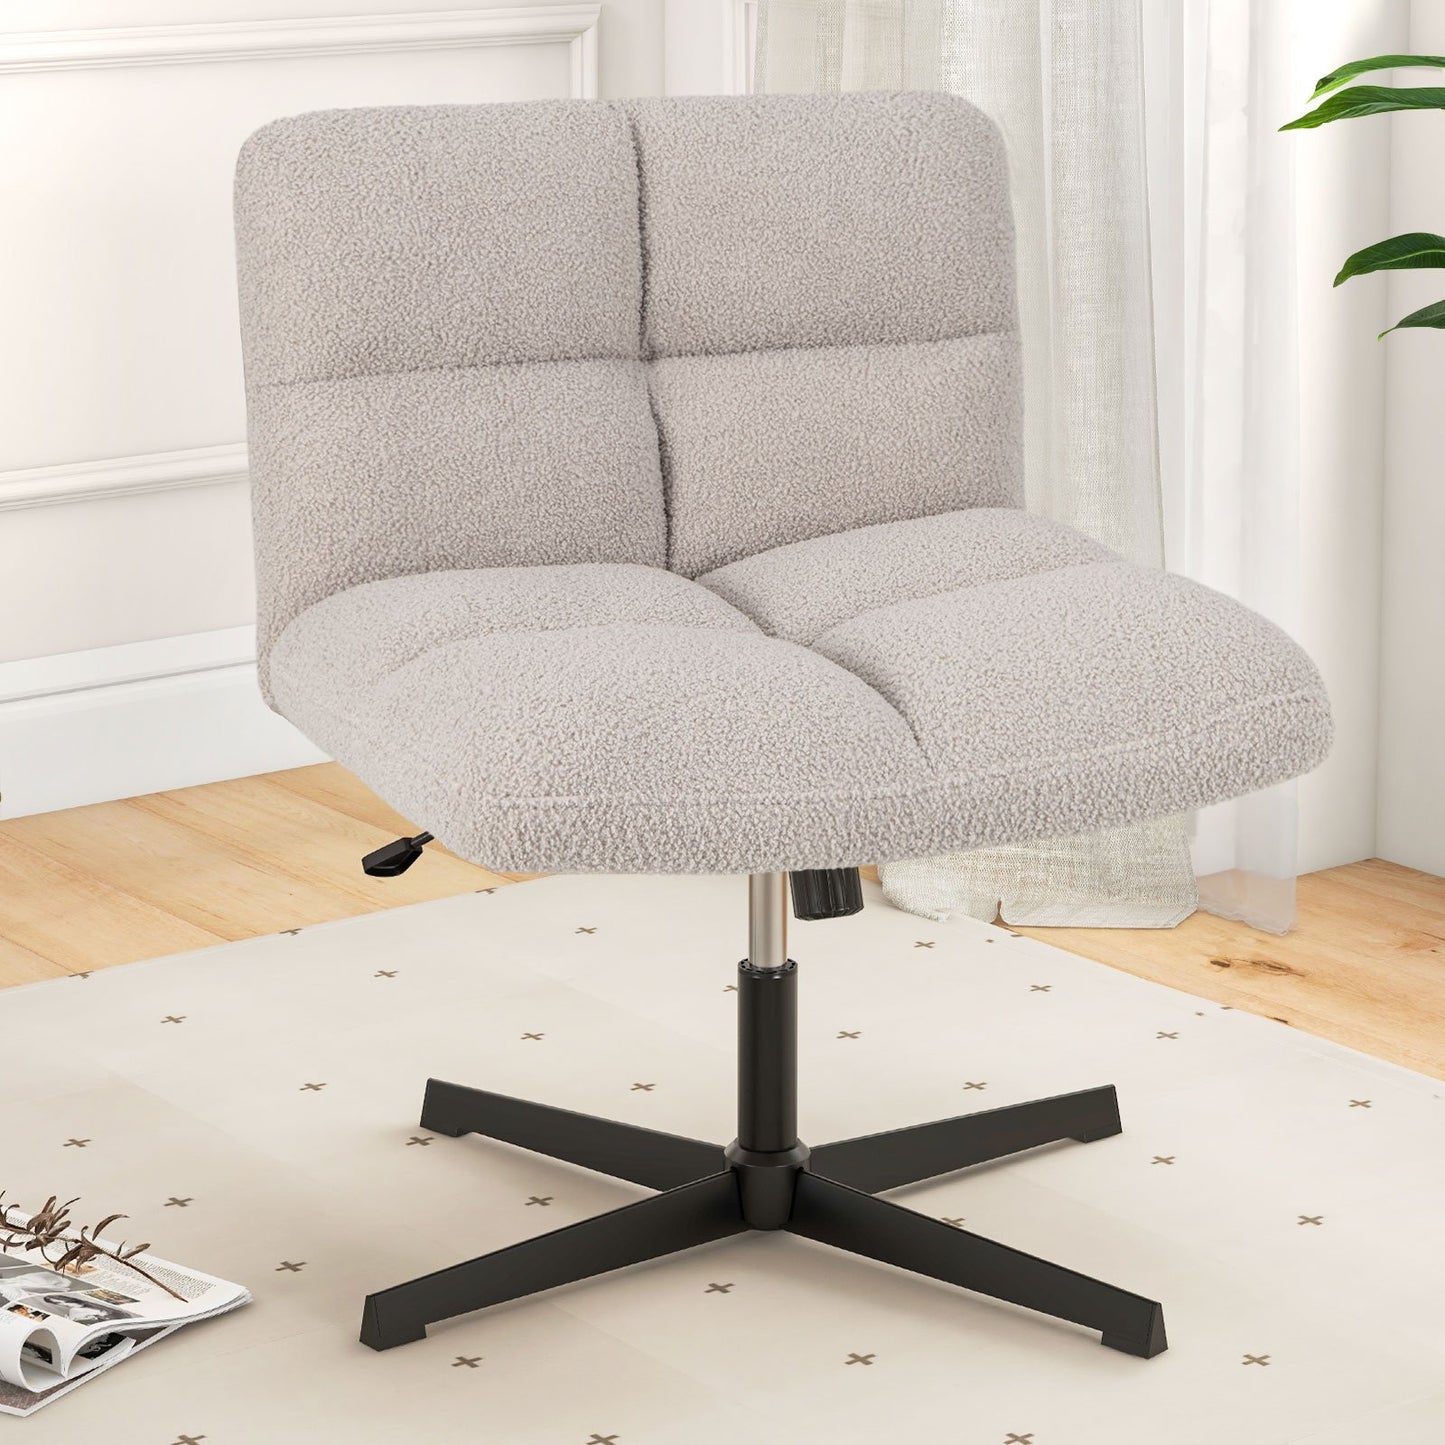 Office Armless Chair Cross Legged with Imitation Lamb Fleece and Adjustable Height, Gray